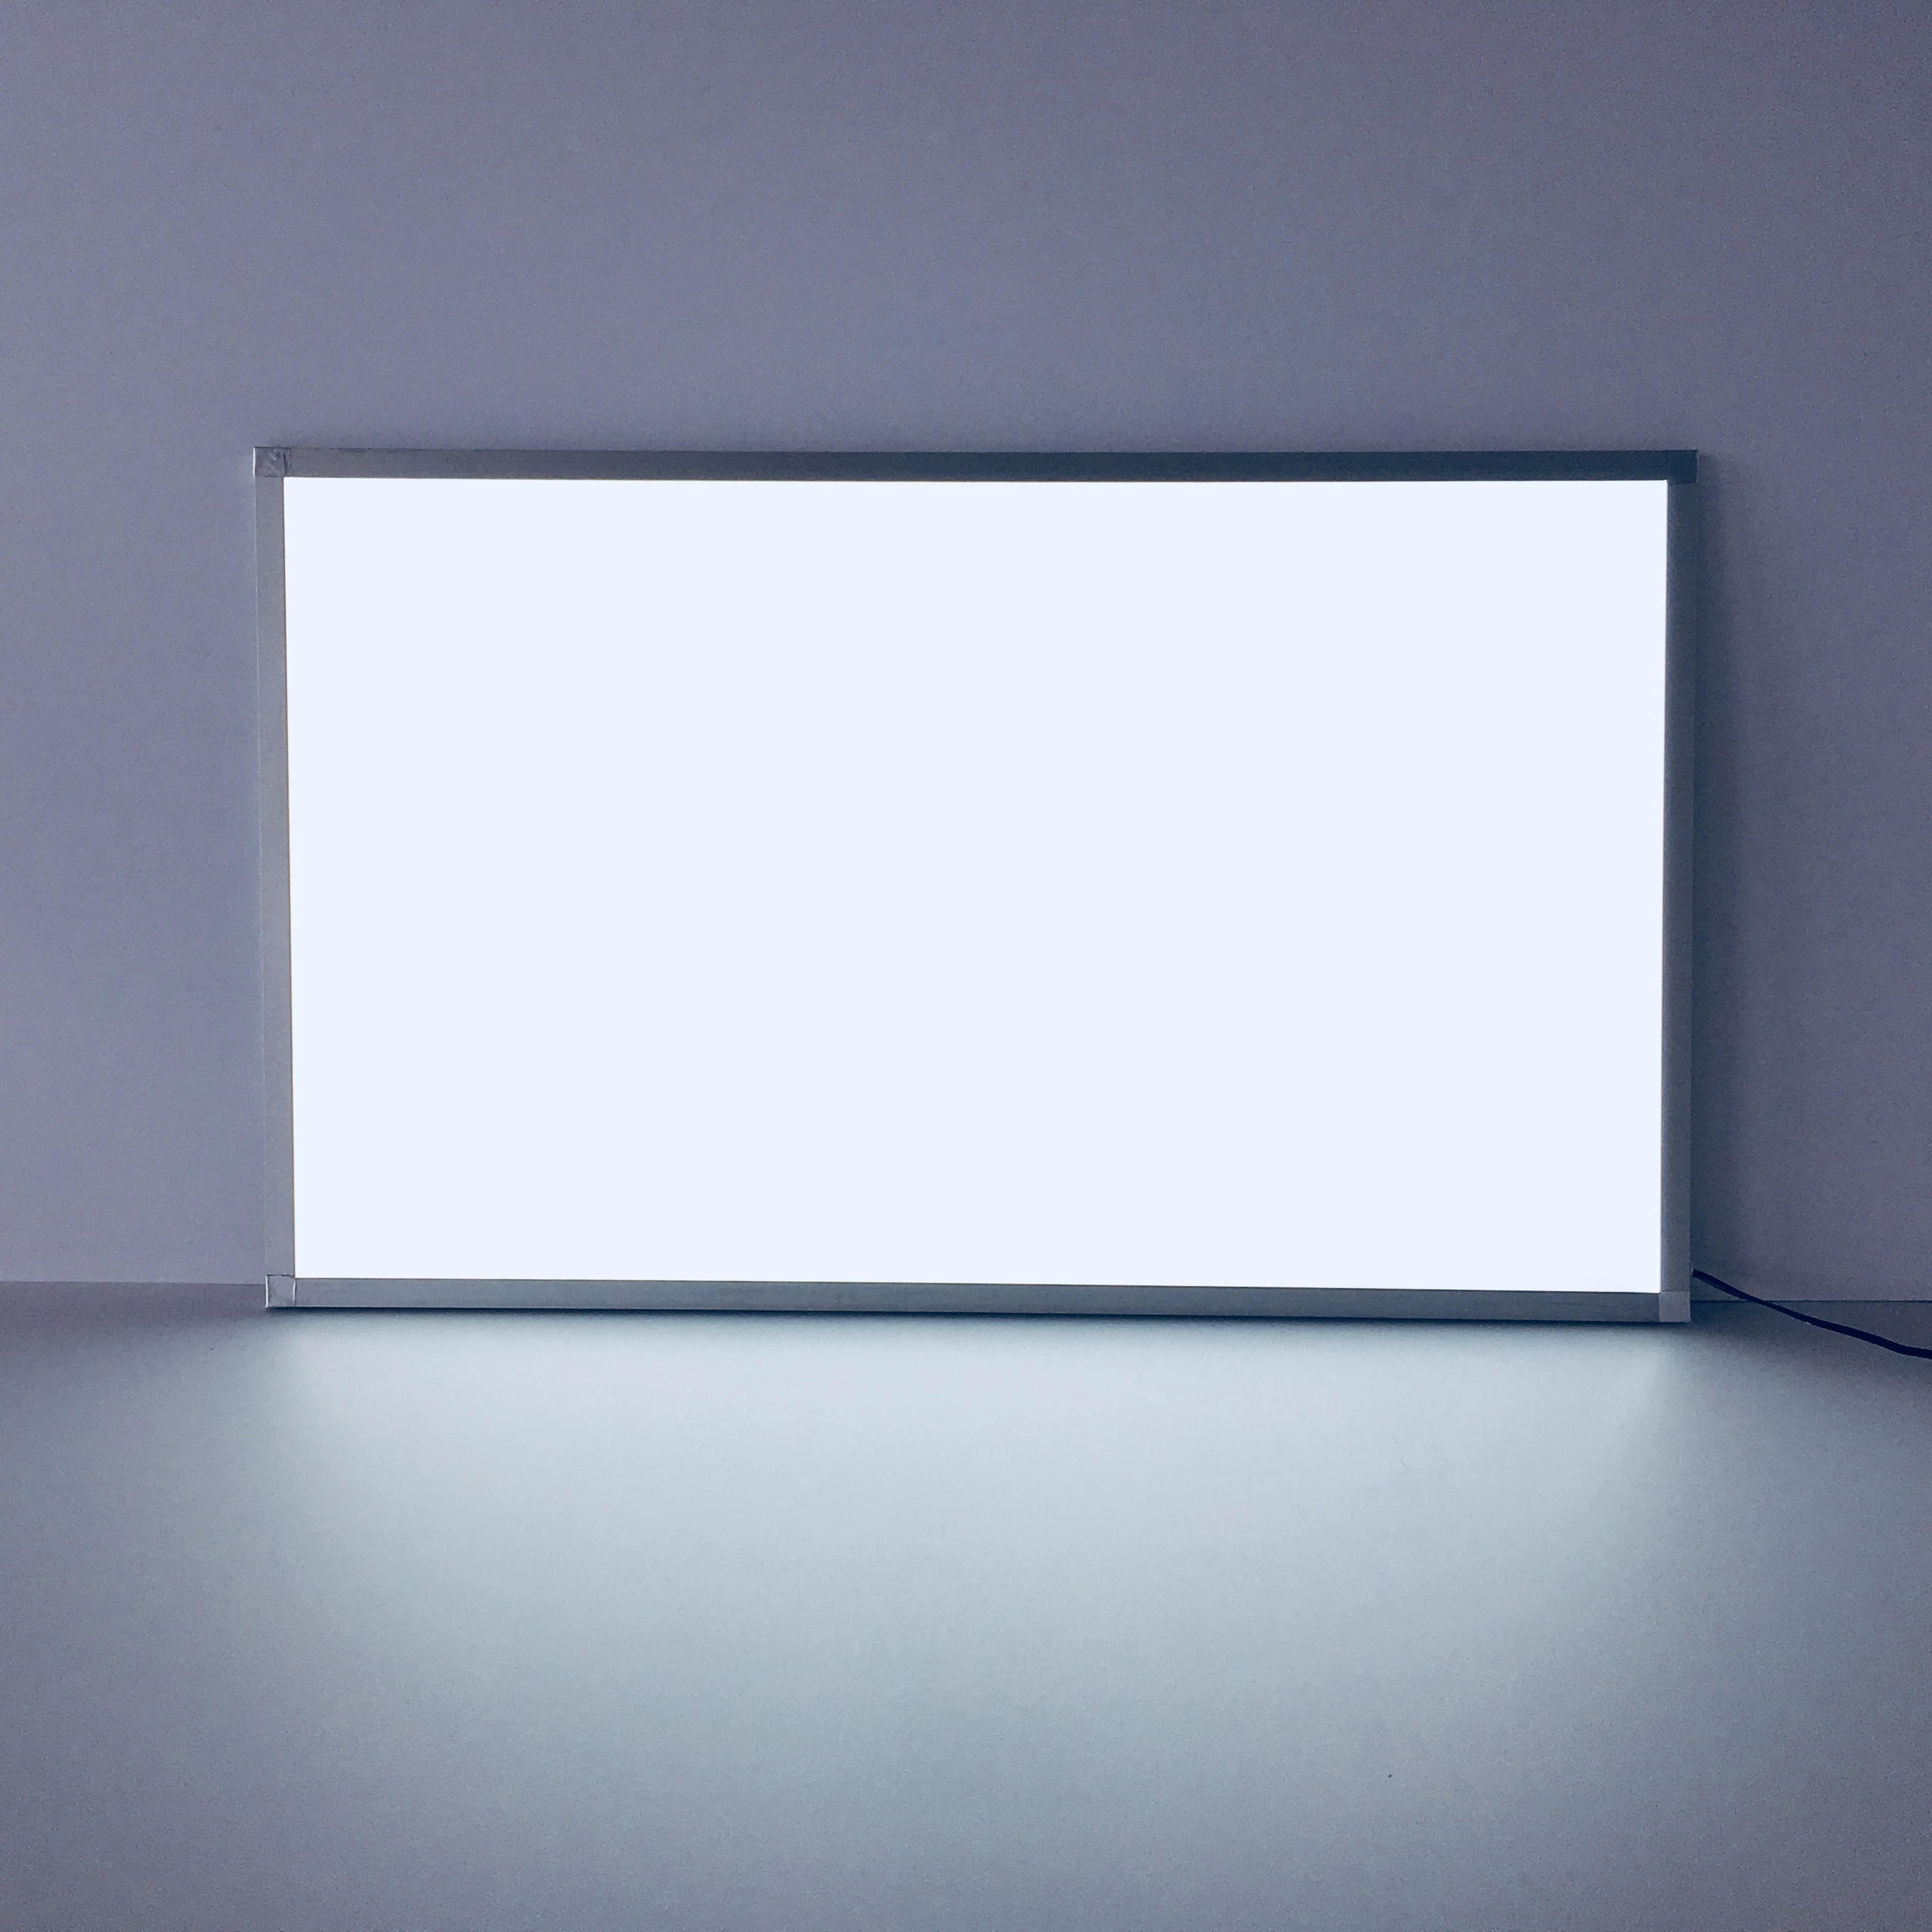 Oled Light Panel Flexible Transparent Acrylic Sheet Led Slim Panel Light for product testing